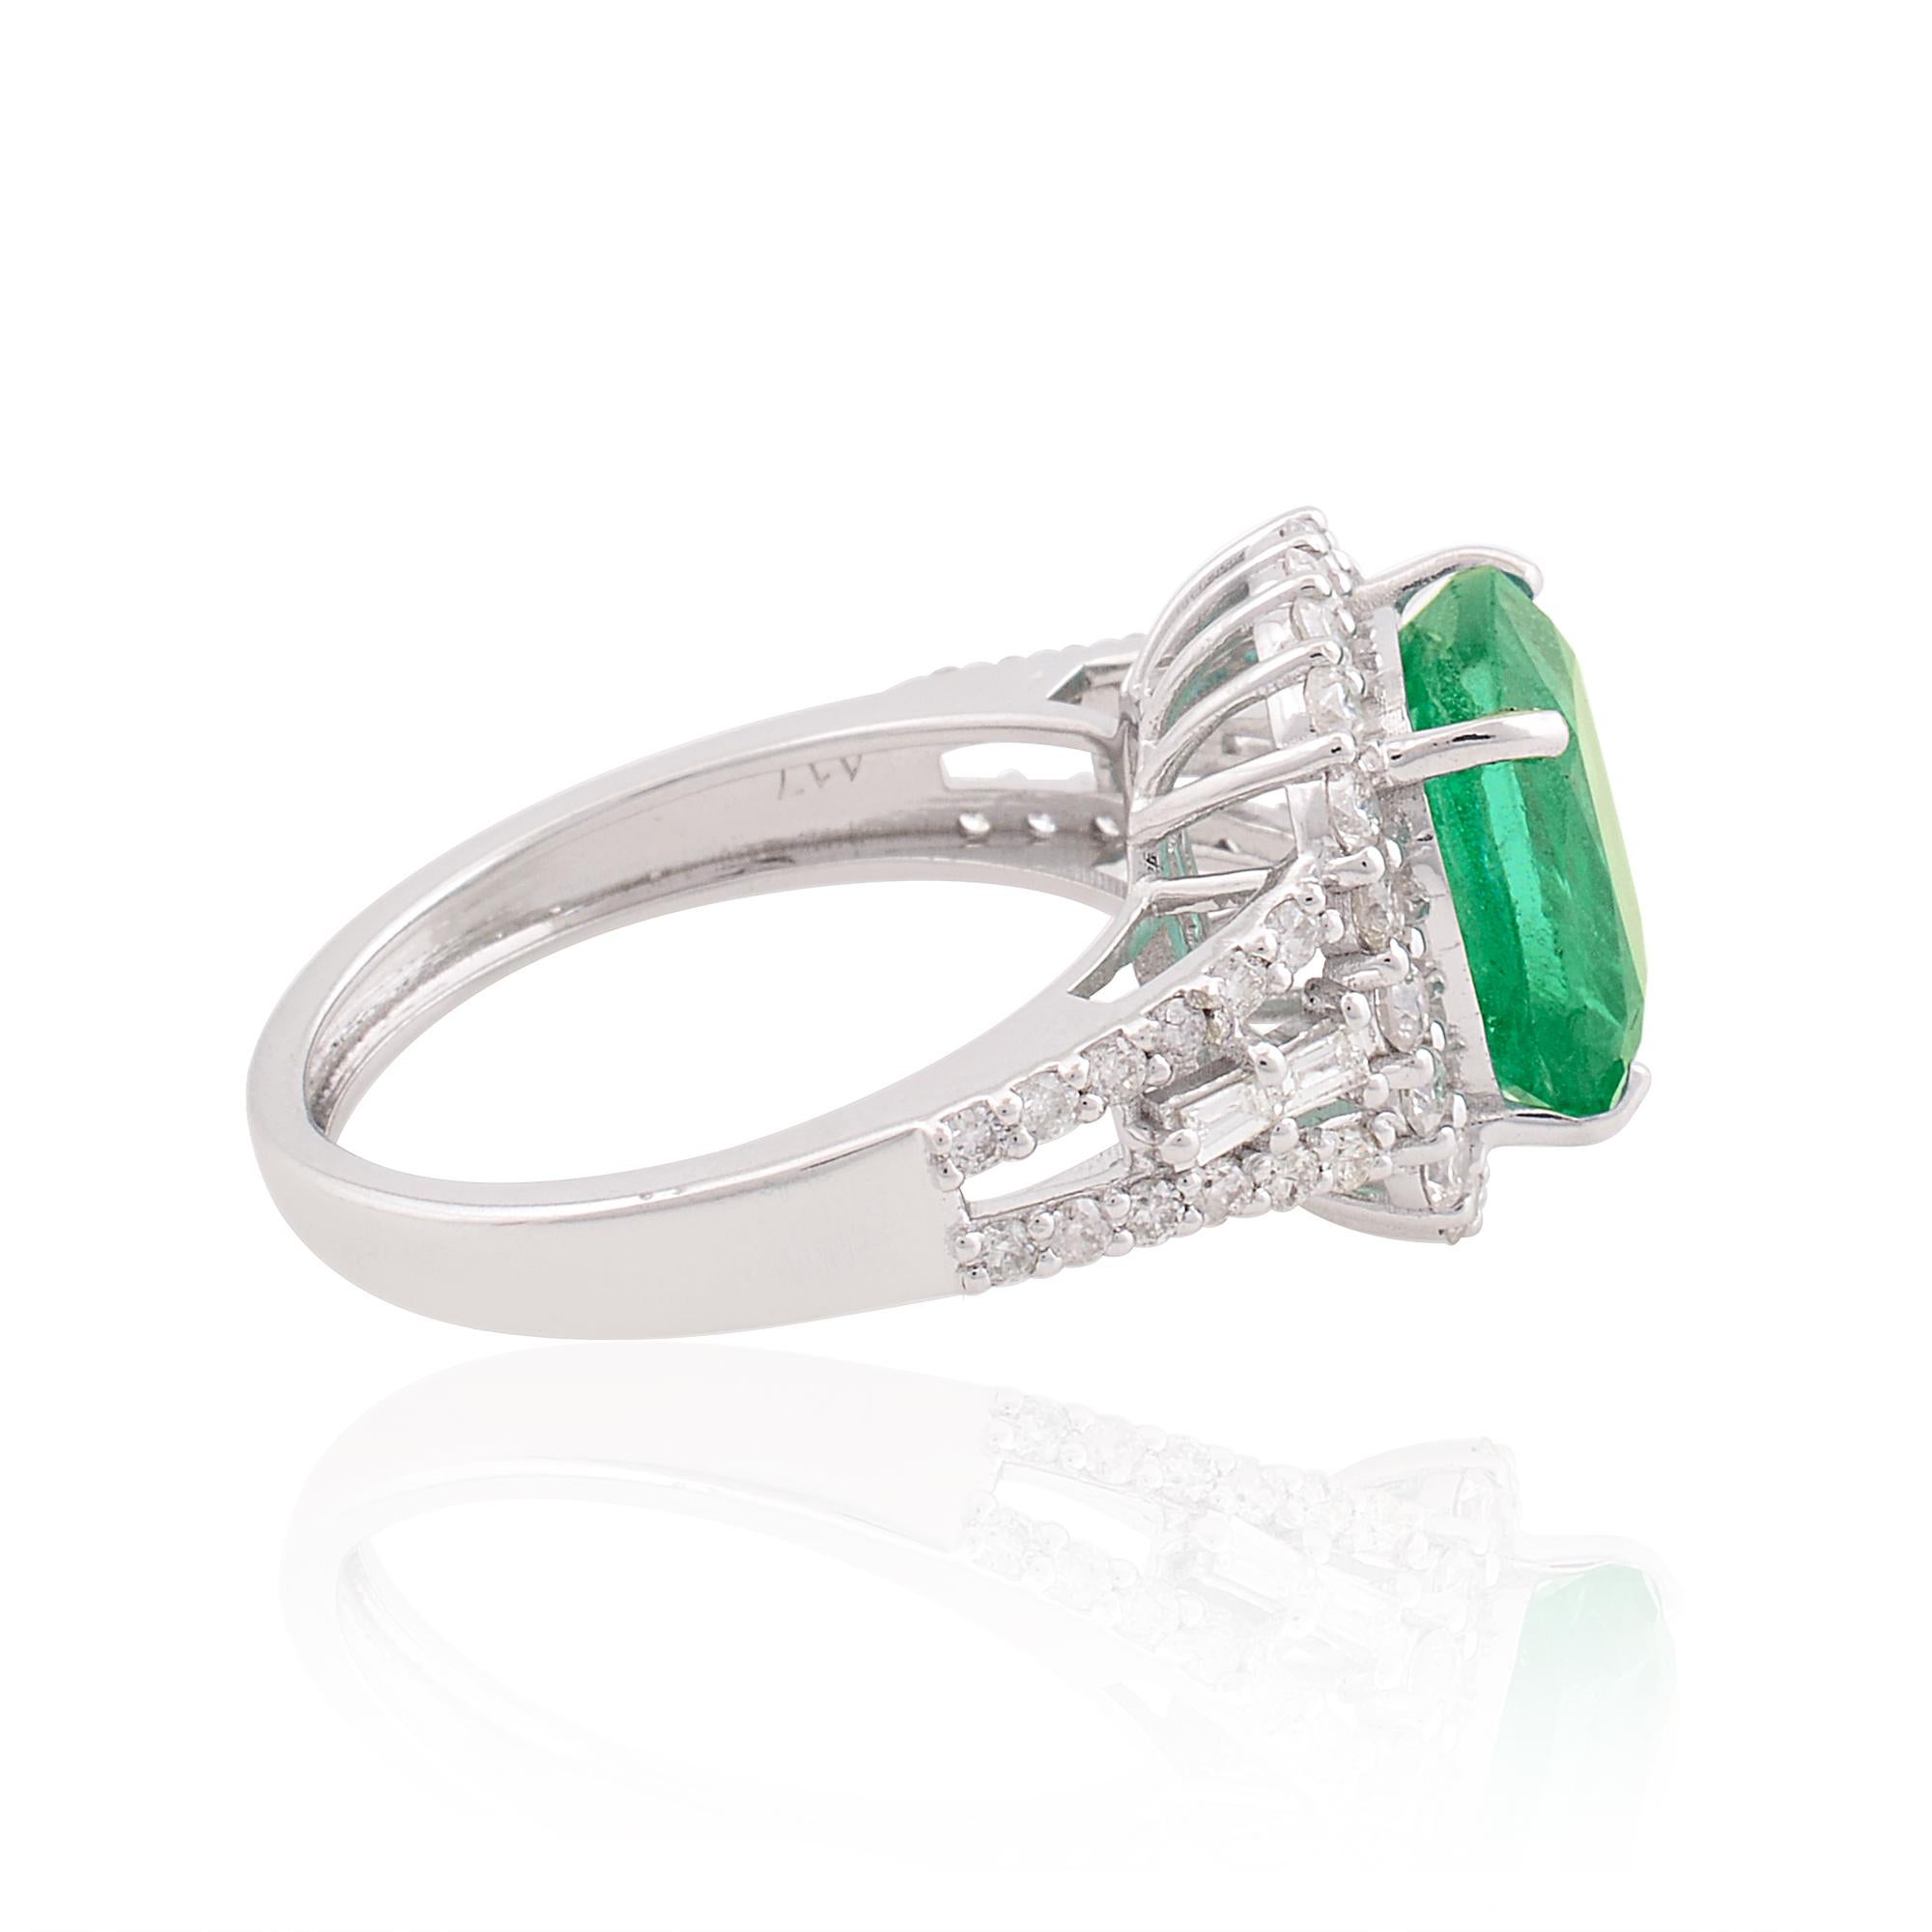 For Sale:  Natural Emerald Gemstone Cocktail Ring Diamond 10 Karat White Gold Fine Jewelry 2